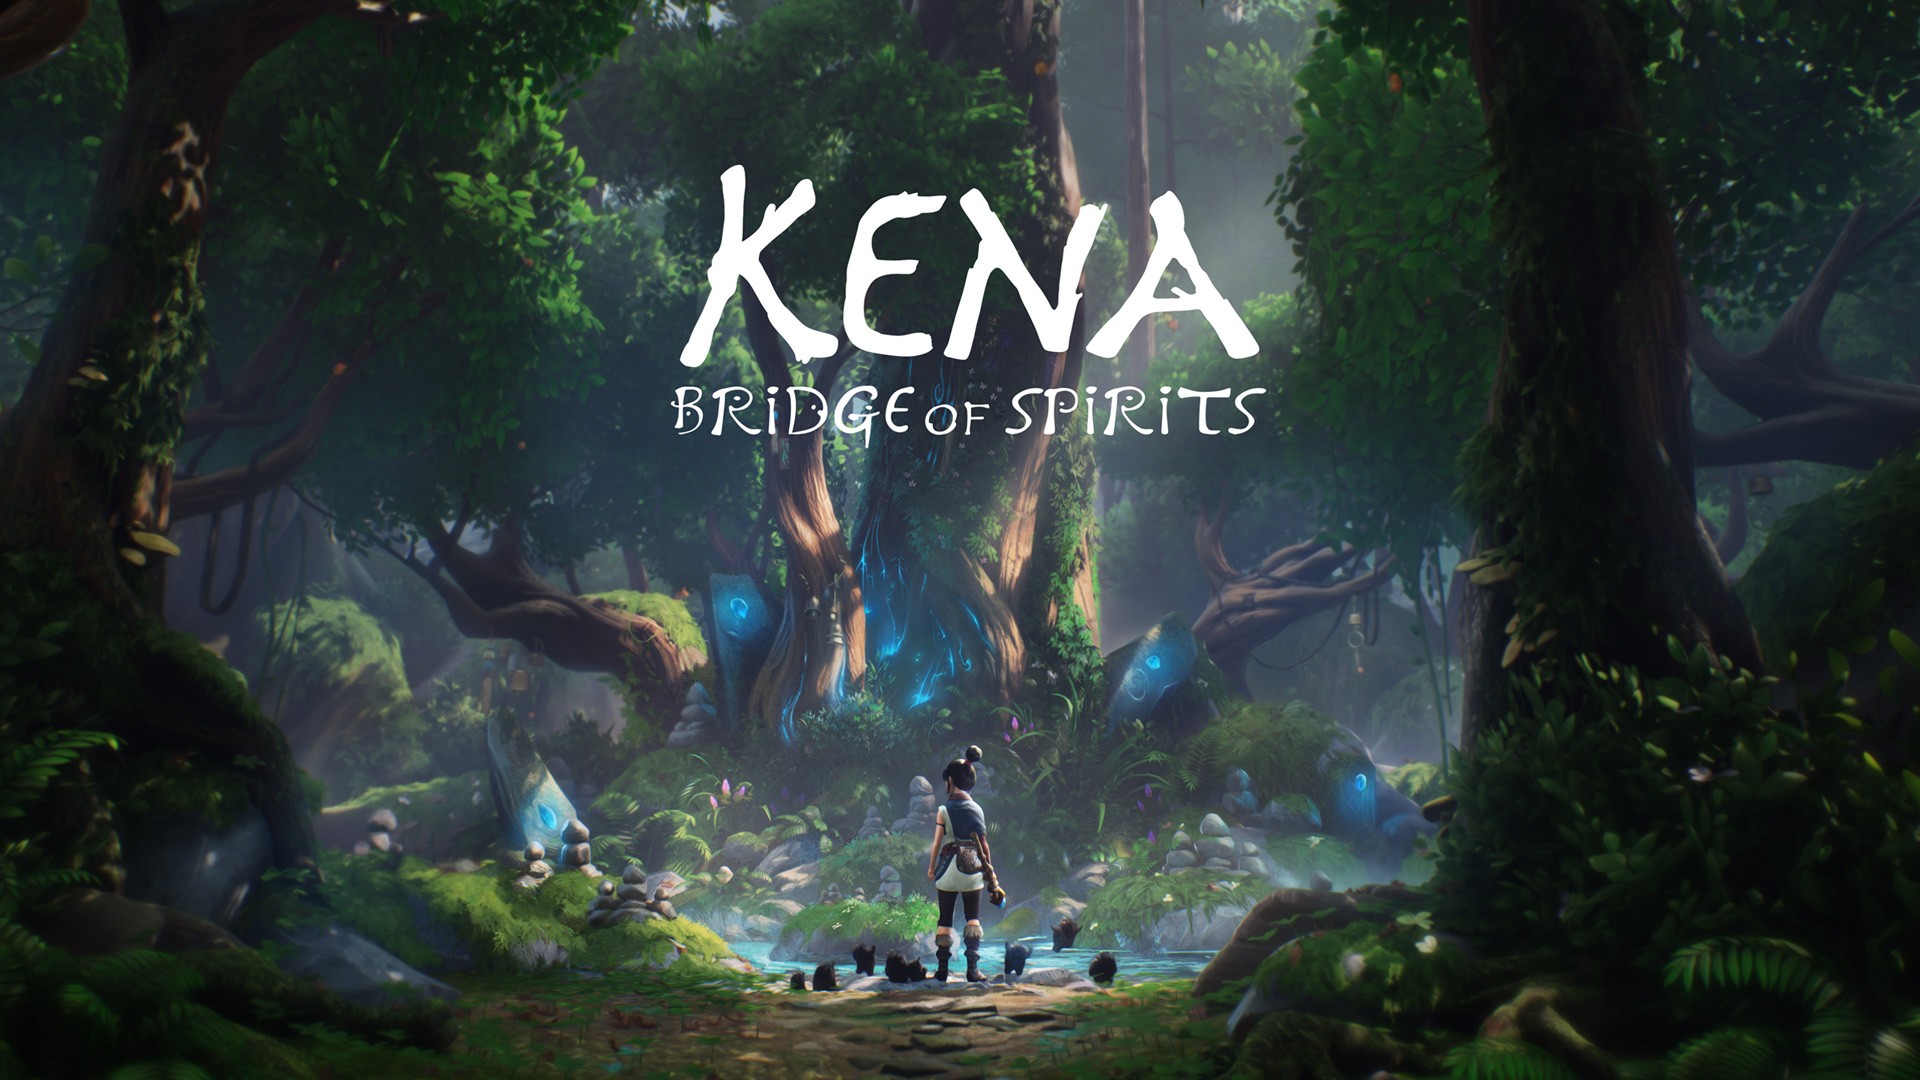 لعبة Kena Bridge of Spirits من استوديو Ember Lab